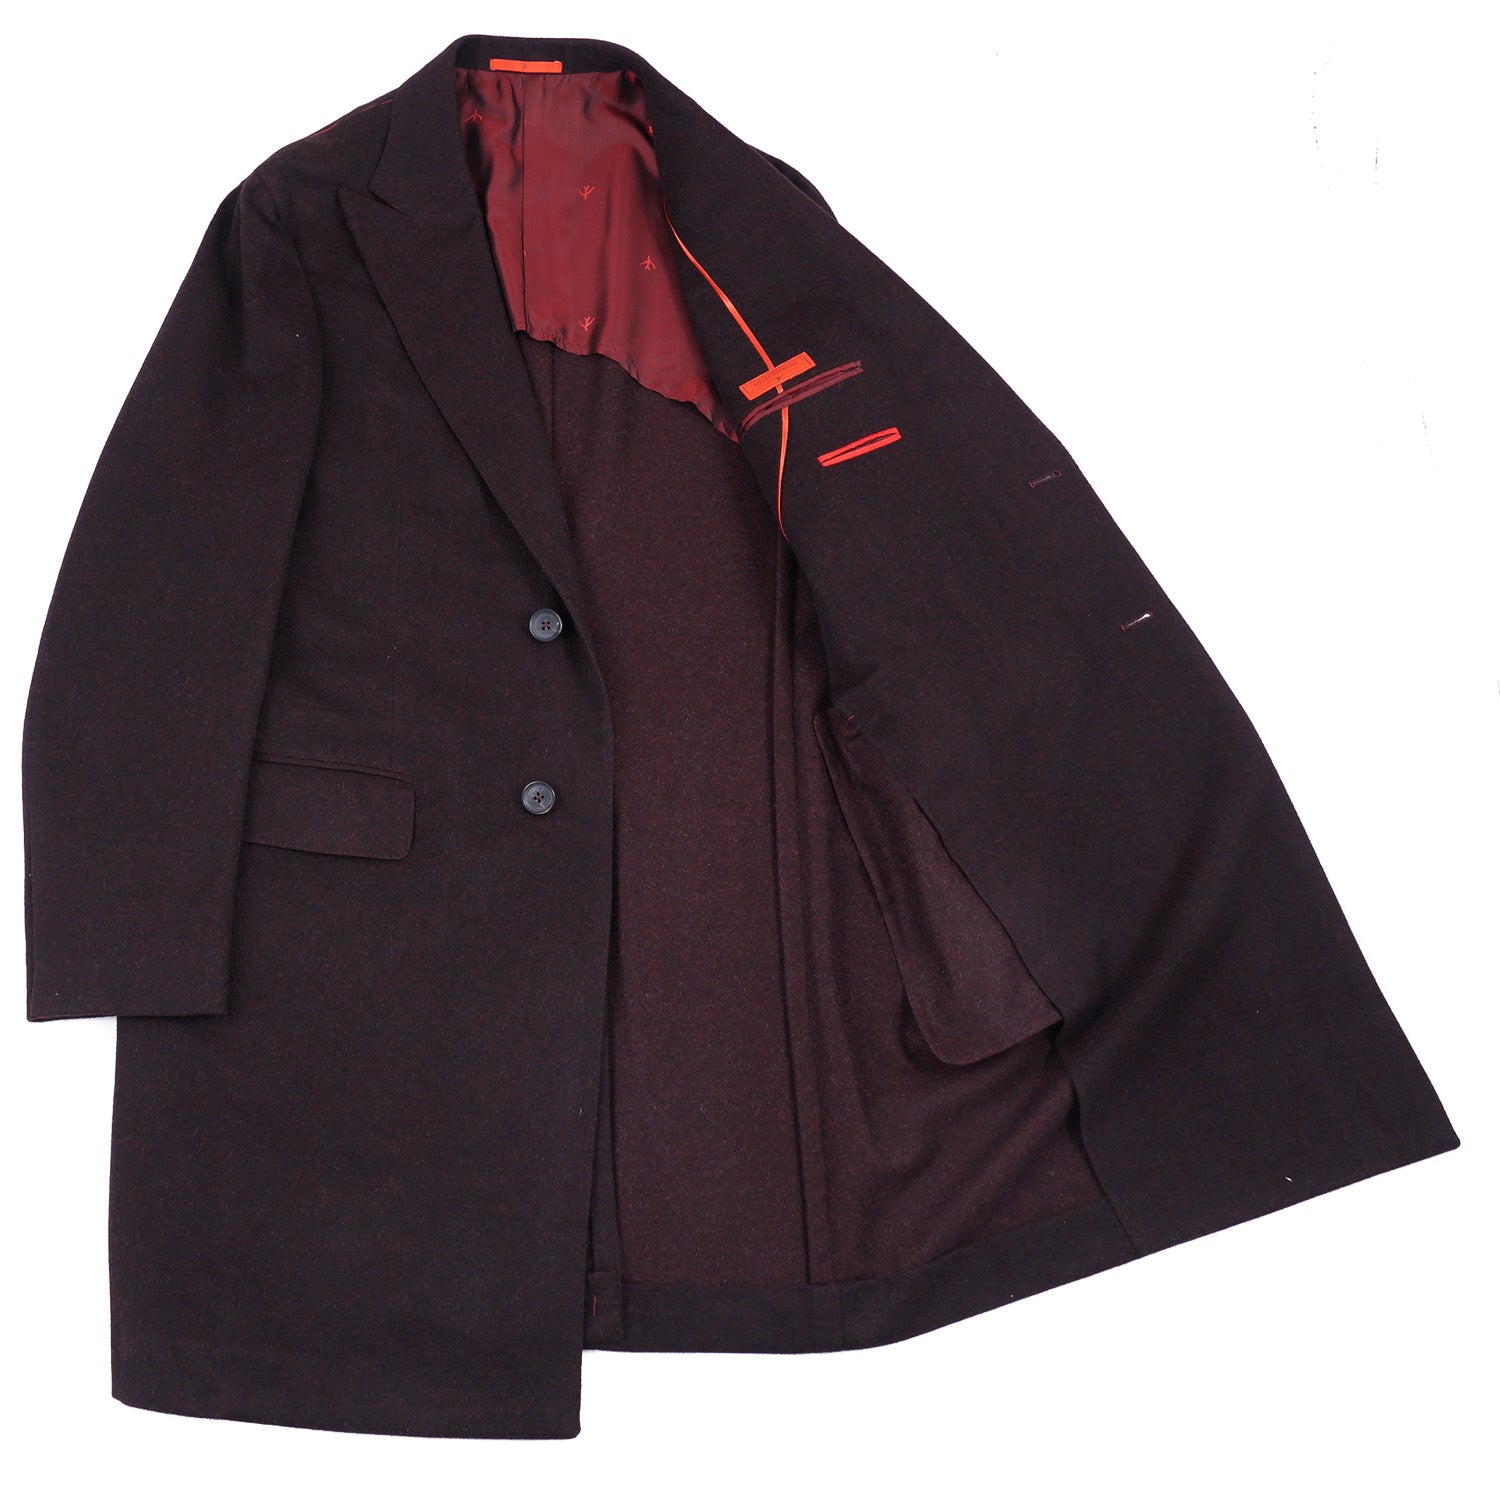 Isaia 'Portofino' Burgundy Cashmere Overcoat - Top Shelf Apparel